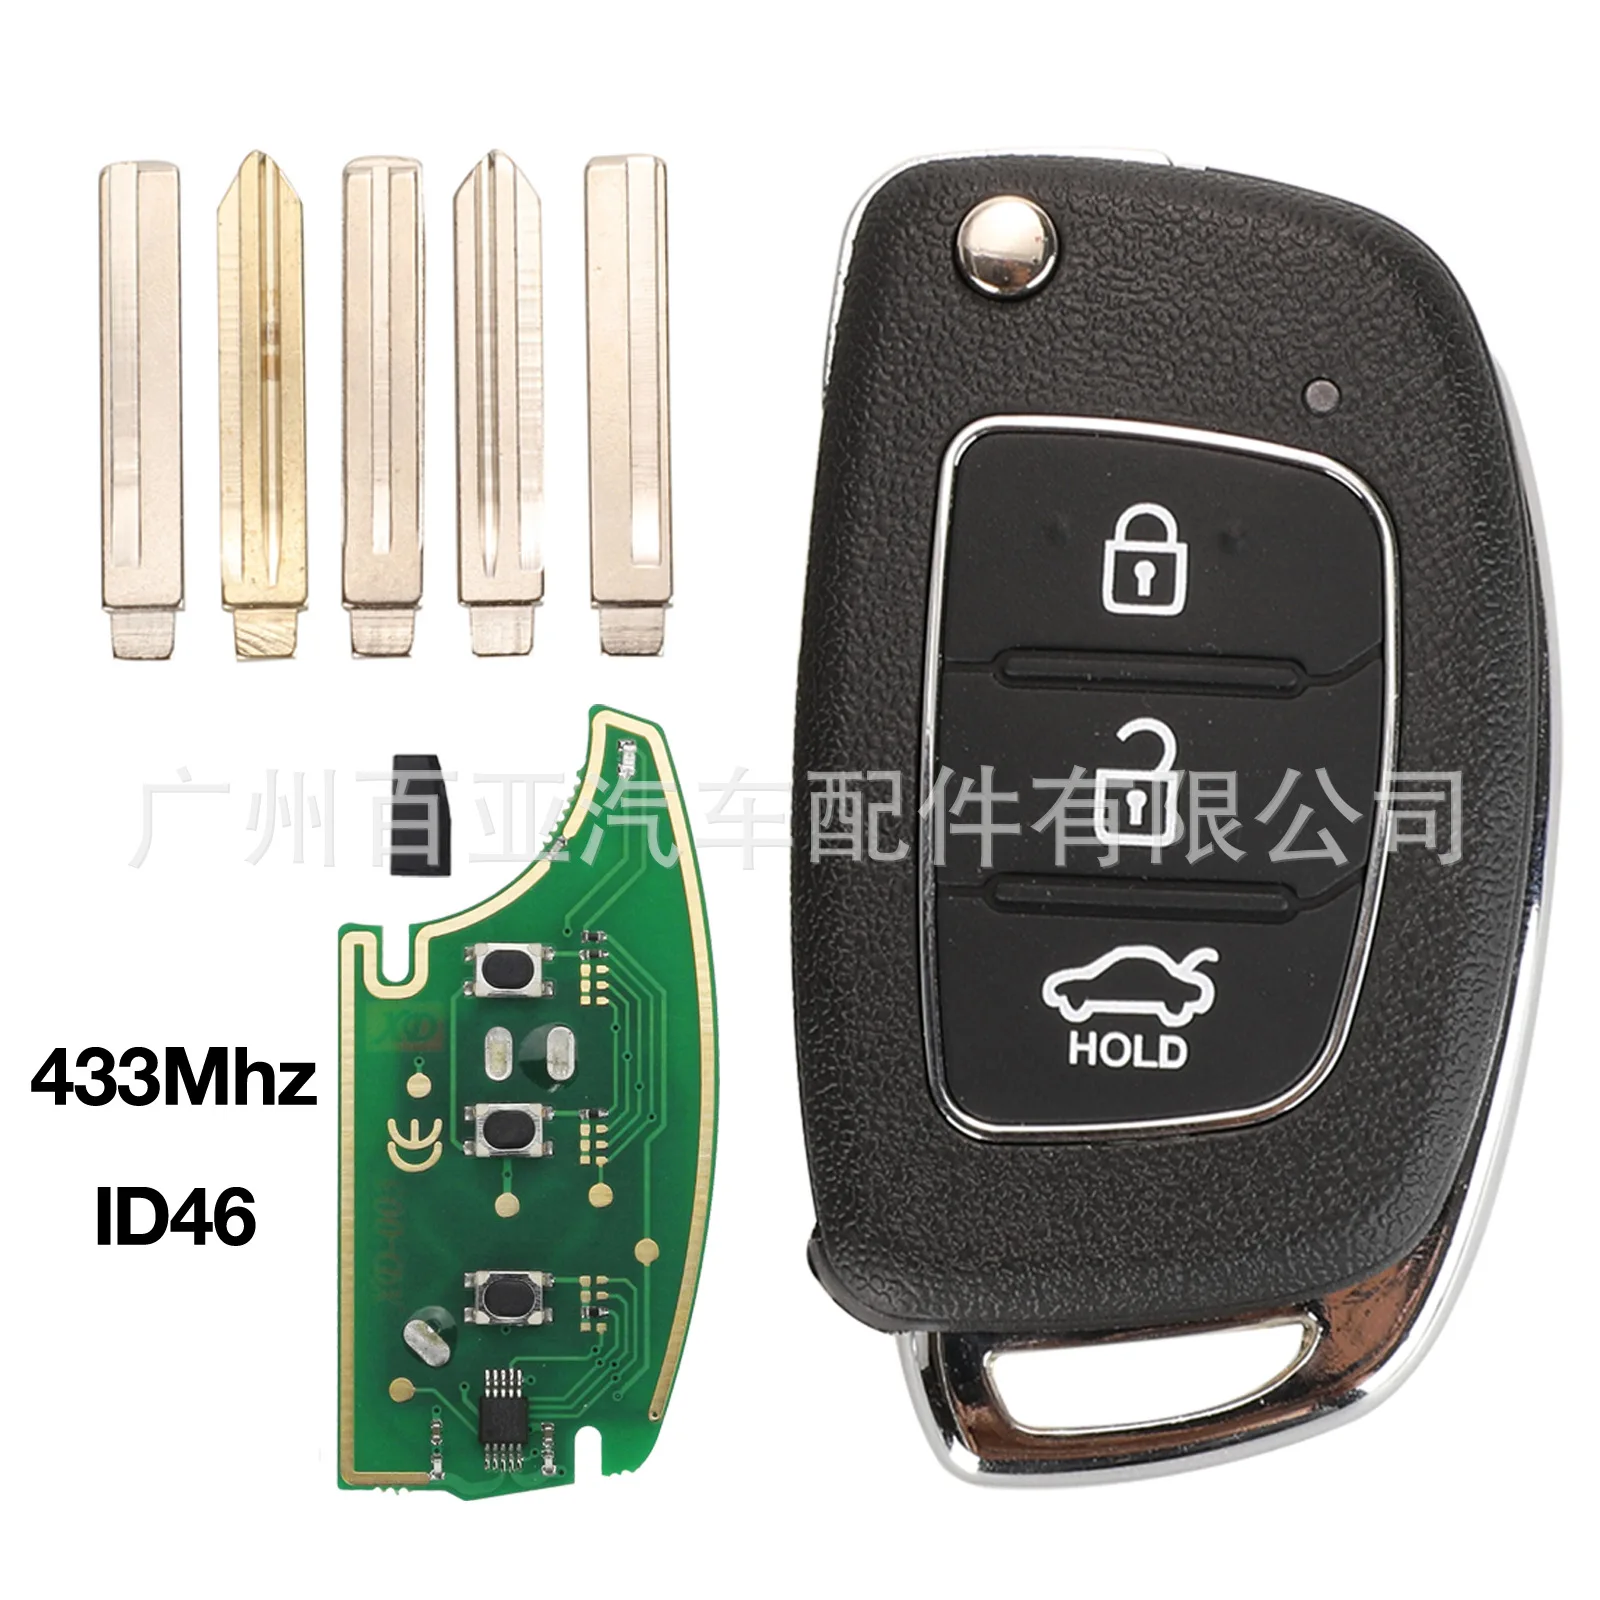 

5PCS Remote Flip Key Fob for Hyundai Elantra Accent Ix35 IX45 I30 Solaris Tucson I20 Santa Fe 315/433mhz ID46 Chip